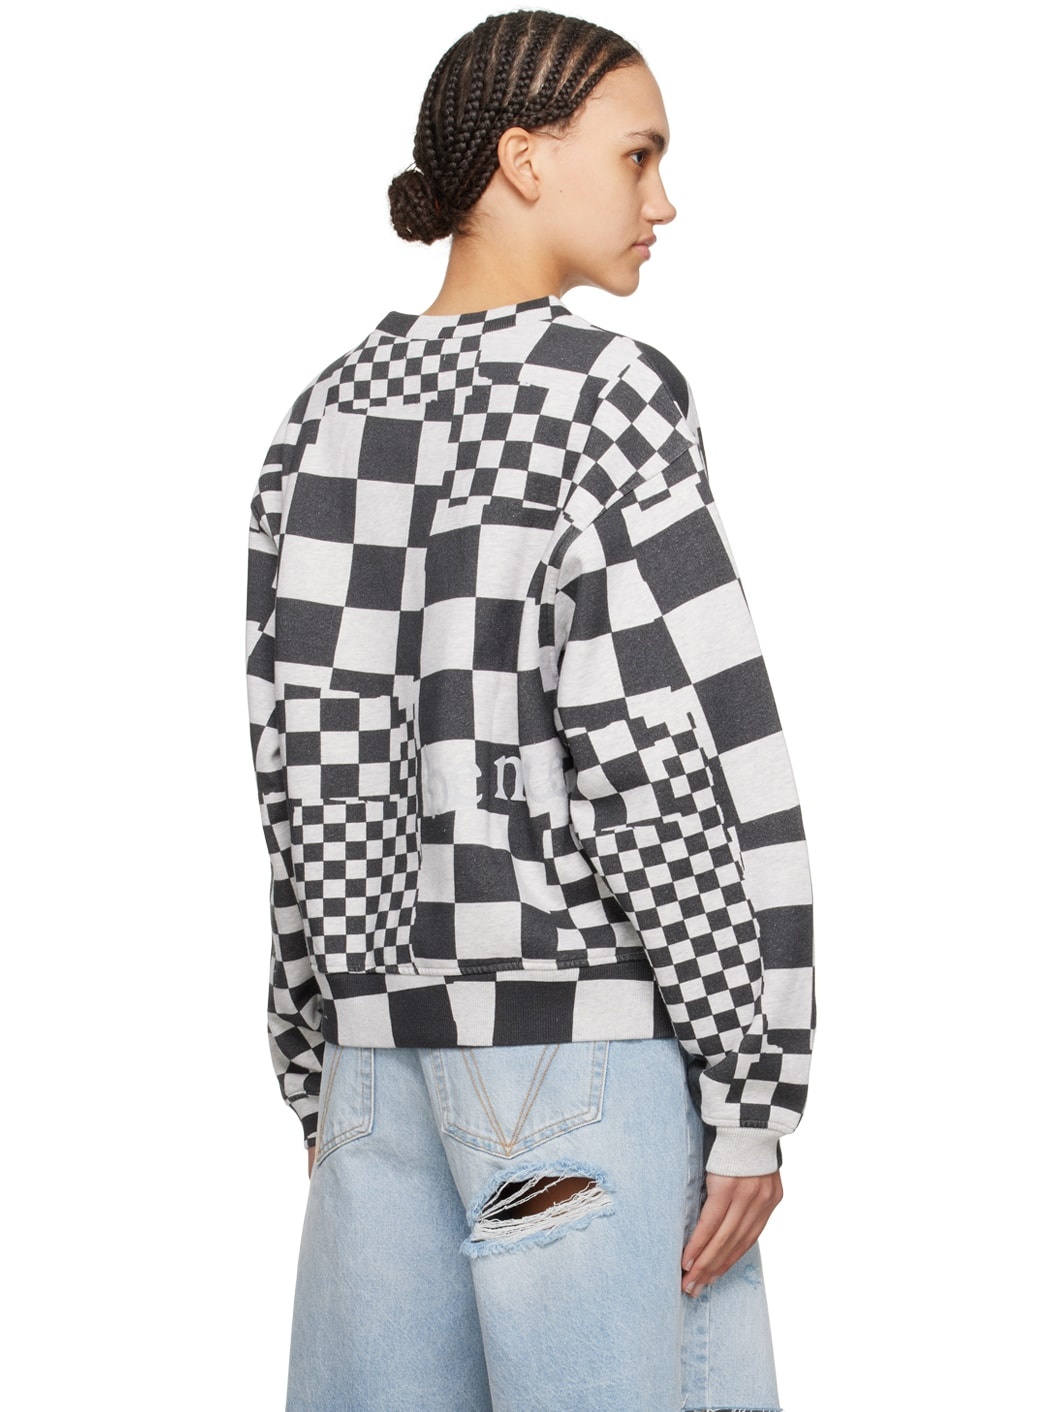 Gray & Black Check Sweatshirt - 3